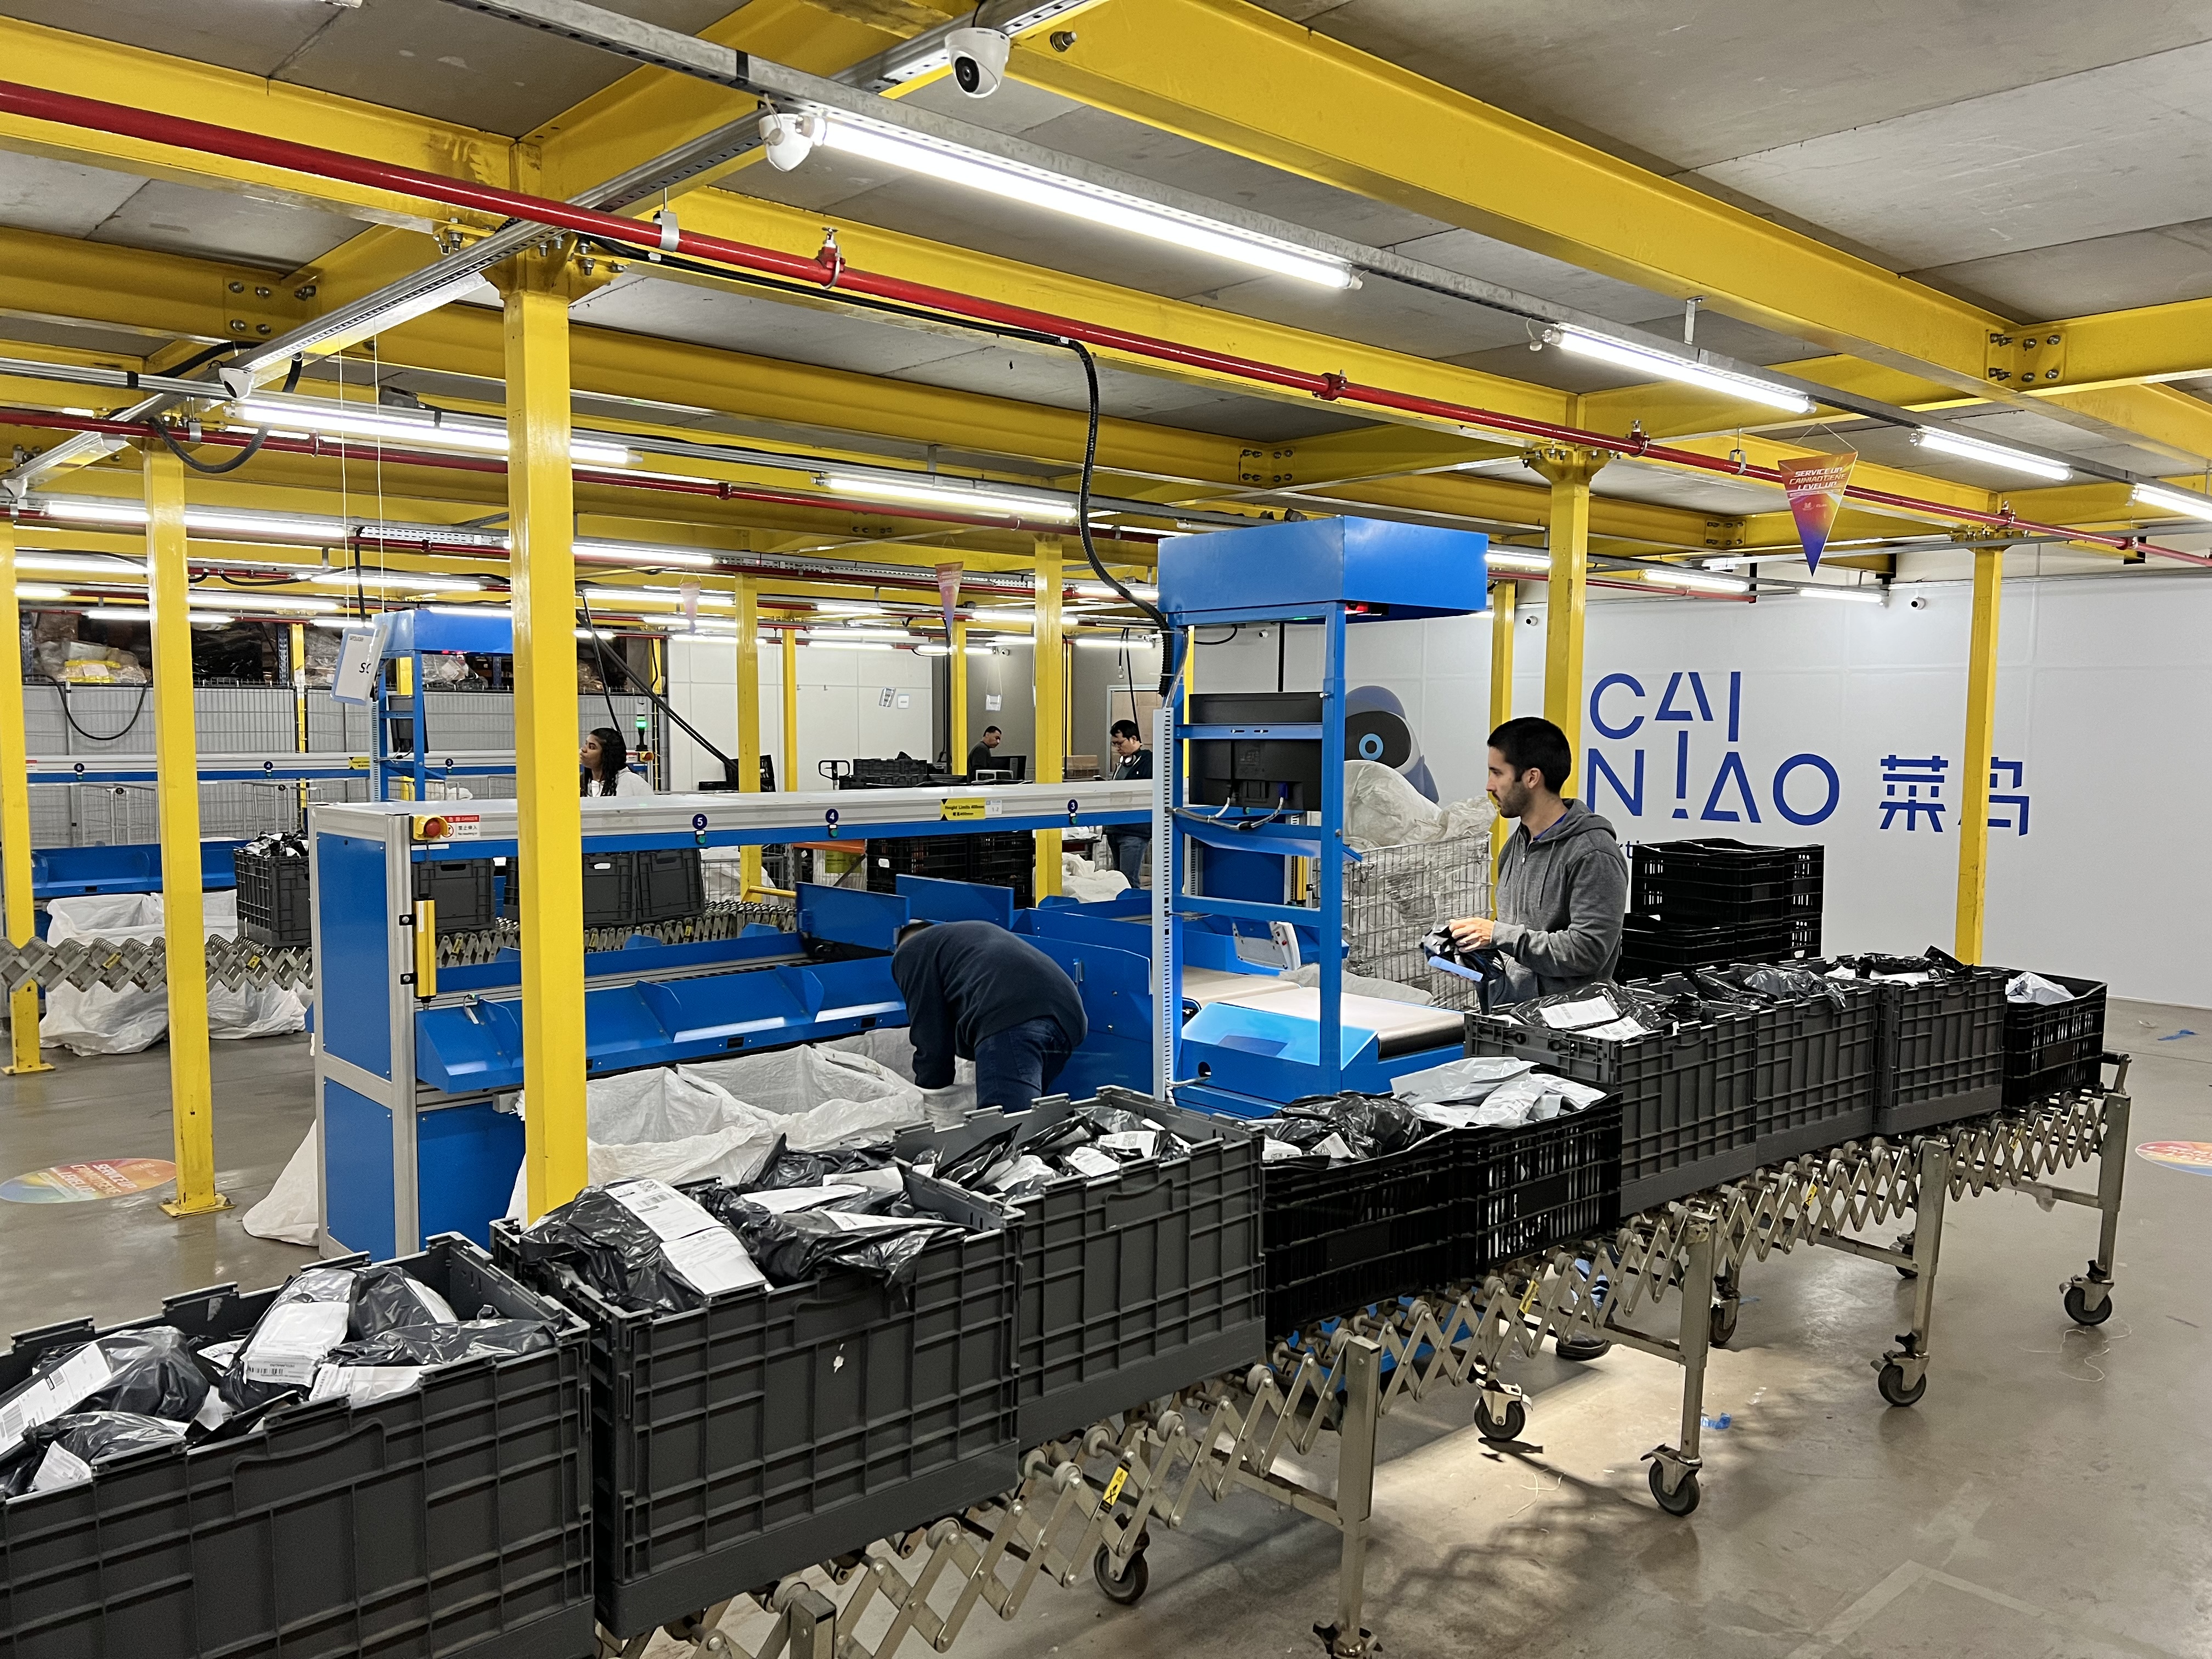 cainiao distribution center in Brazil.JPG